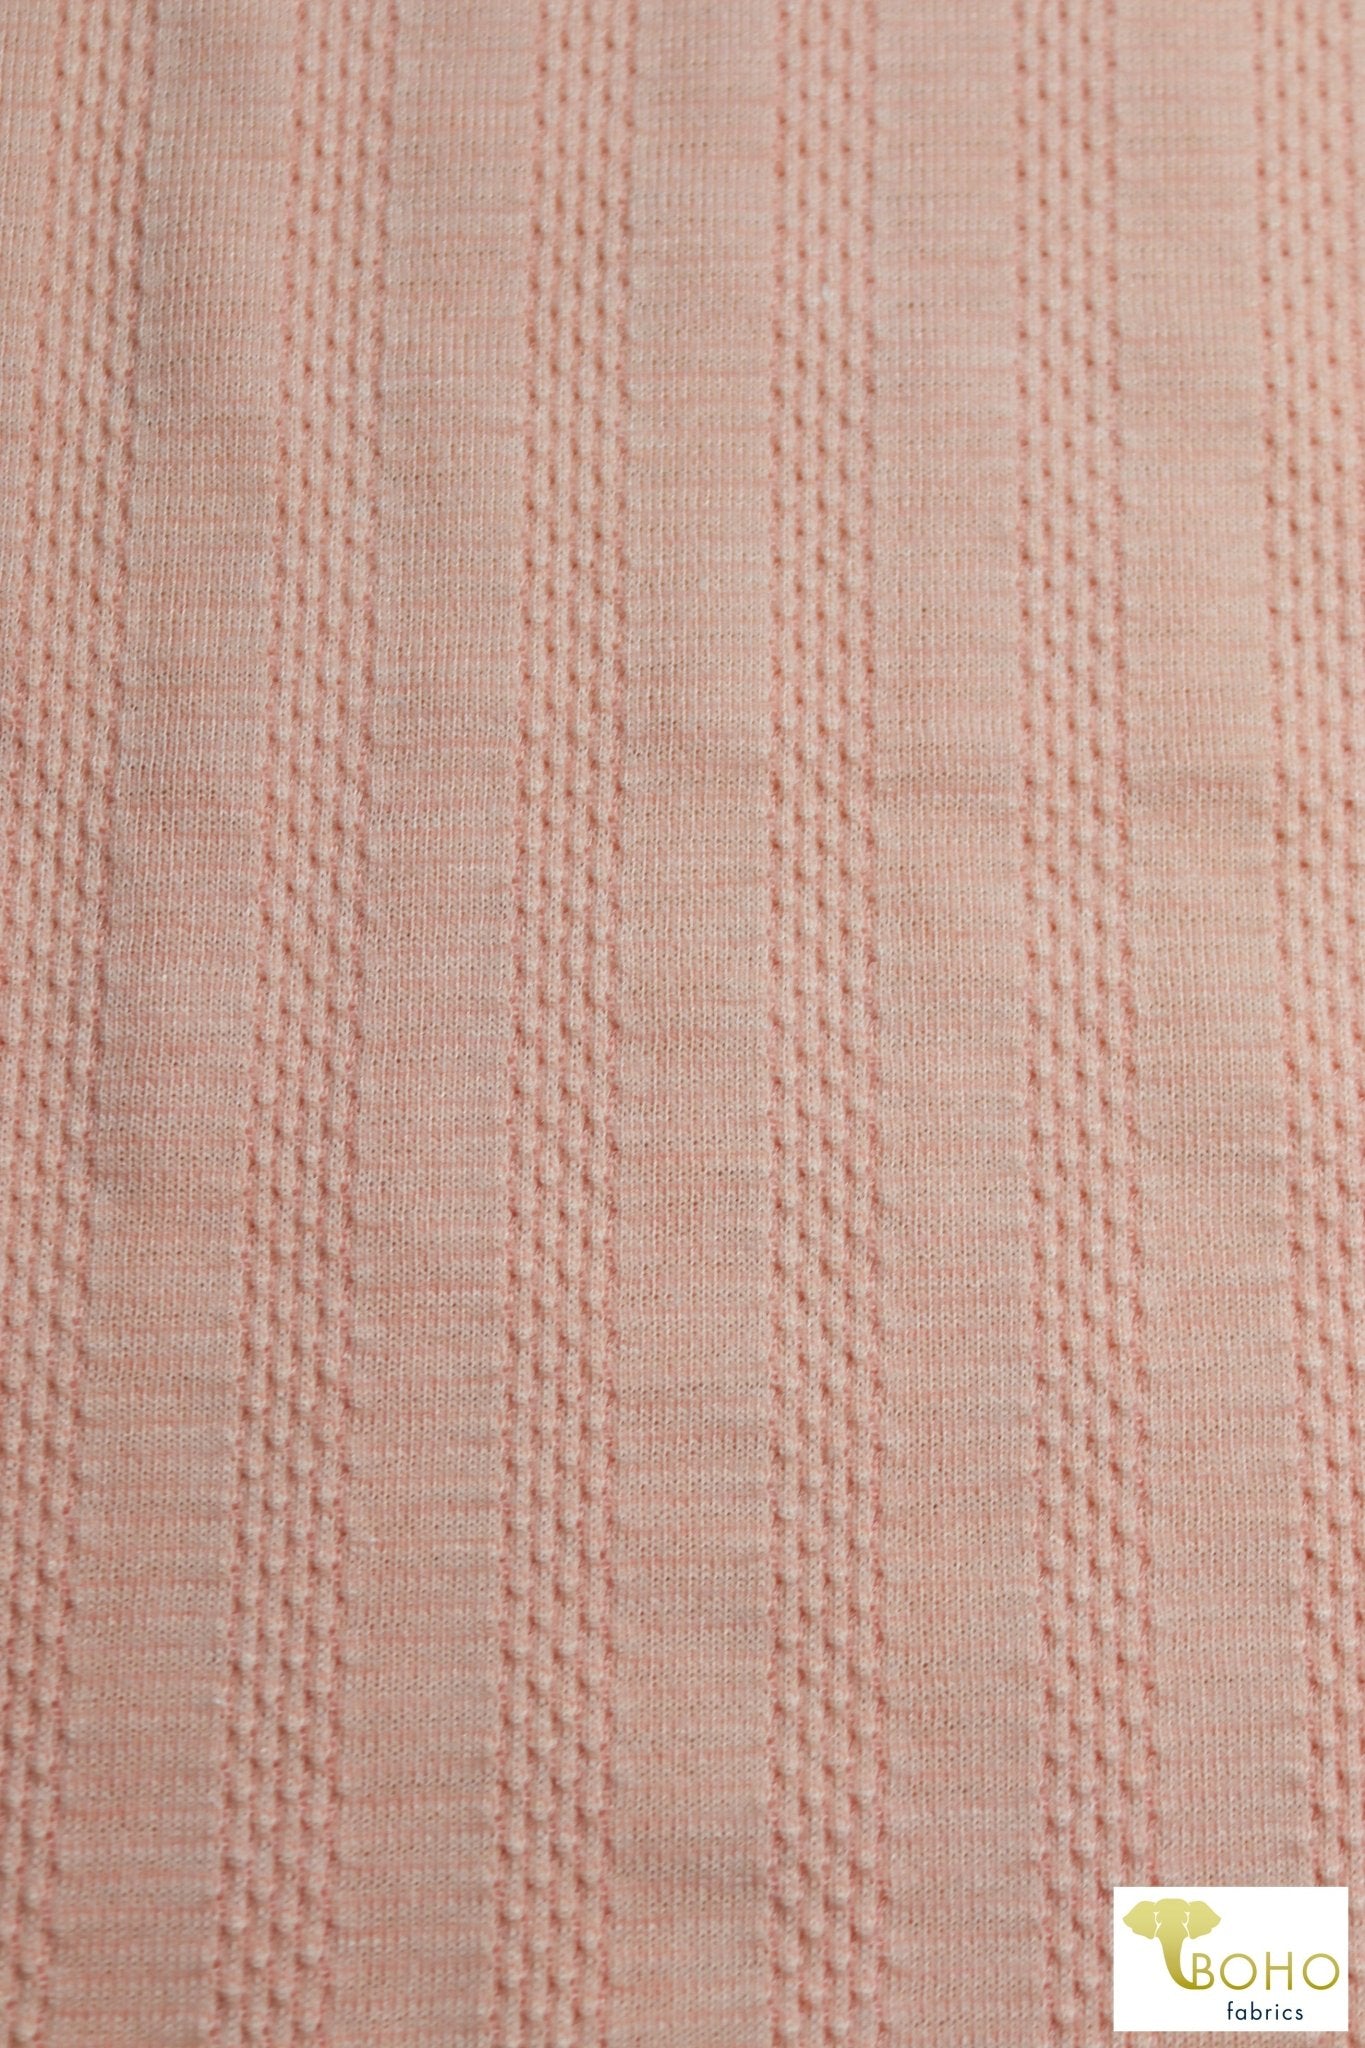 Stitched Stripes in Peach, Pointelle Rib Knit. RIB-129-PNK - Boho Fabrics